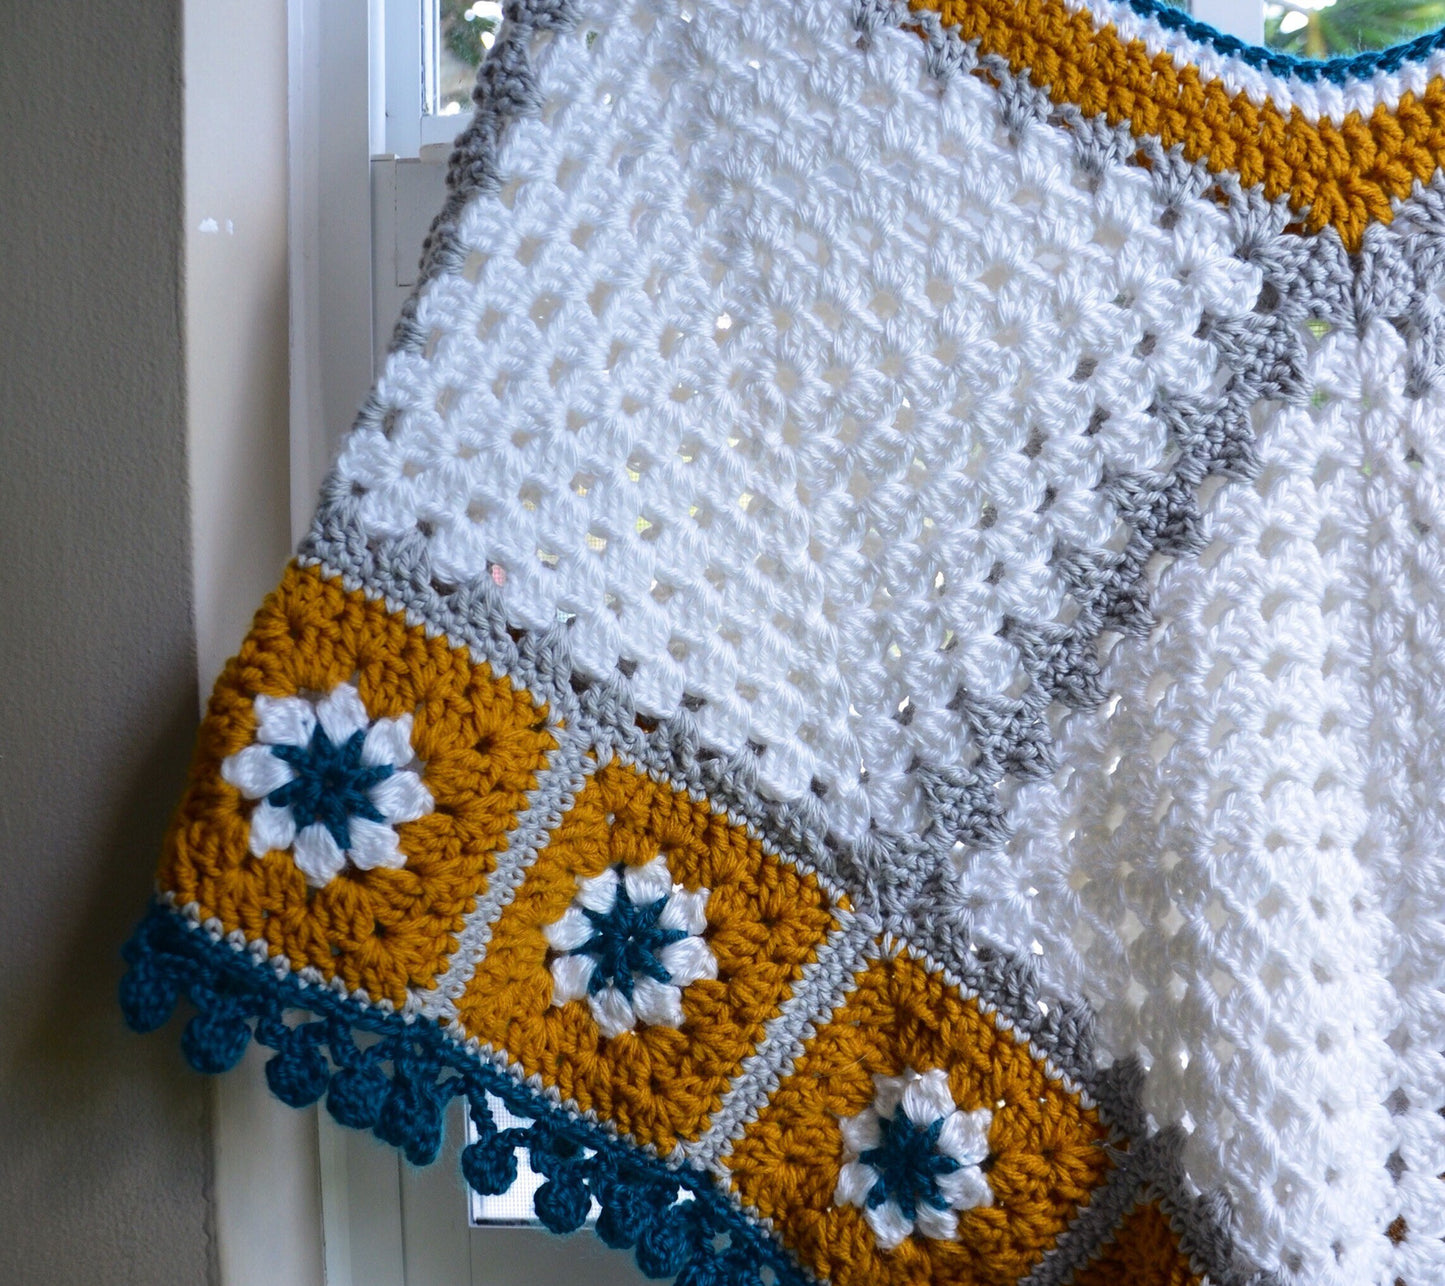 CROCHET PATTERN - The Granny Poncho Crochet Pattern